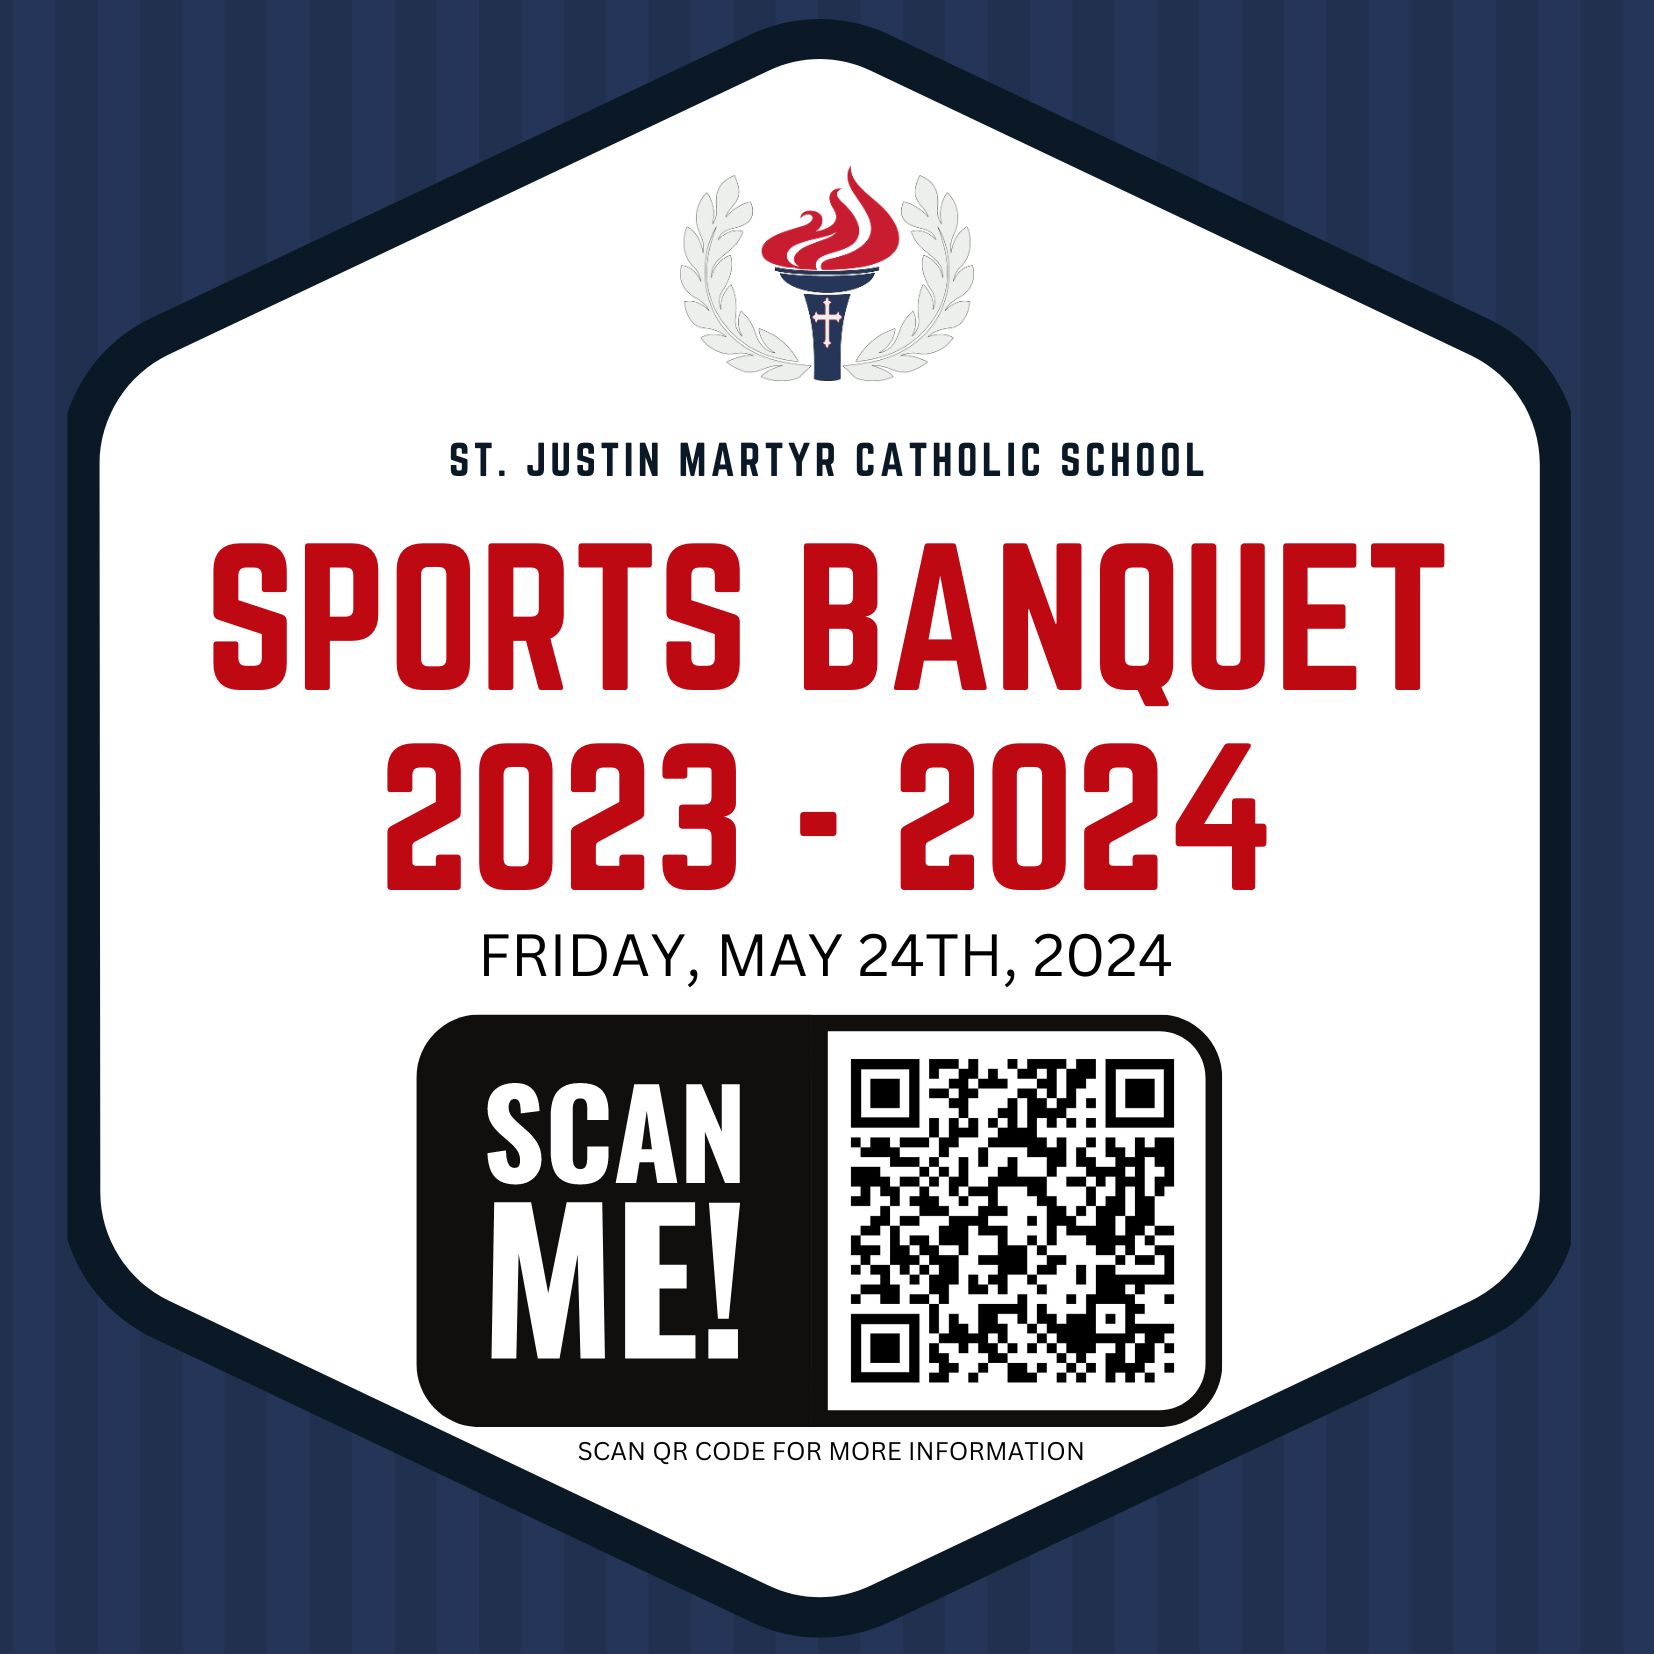 Sports Banquet 2023-2024